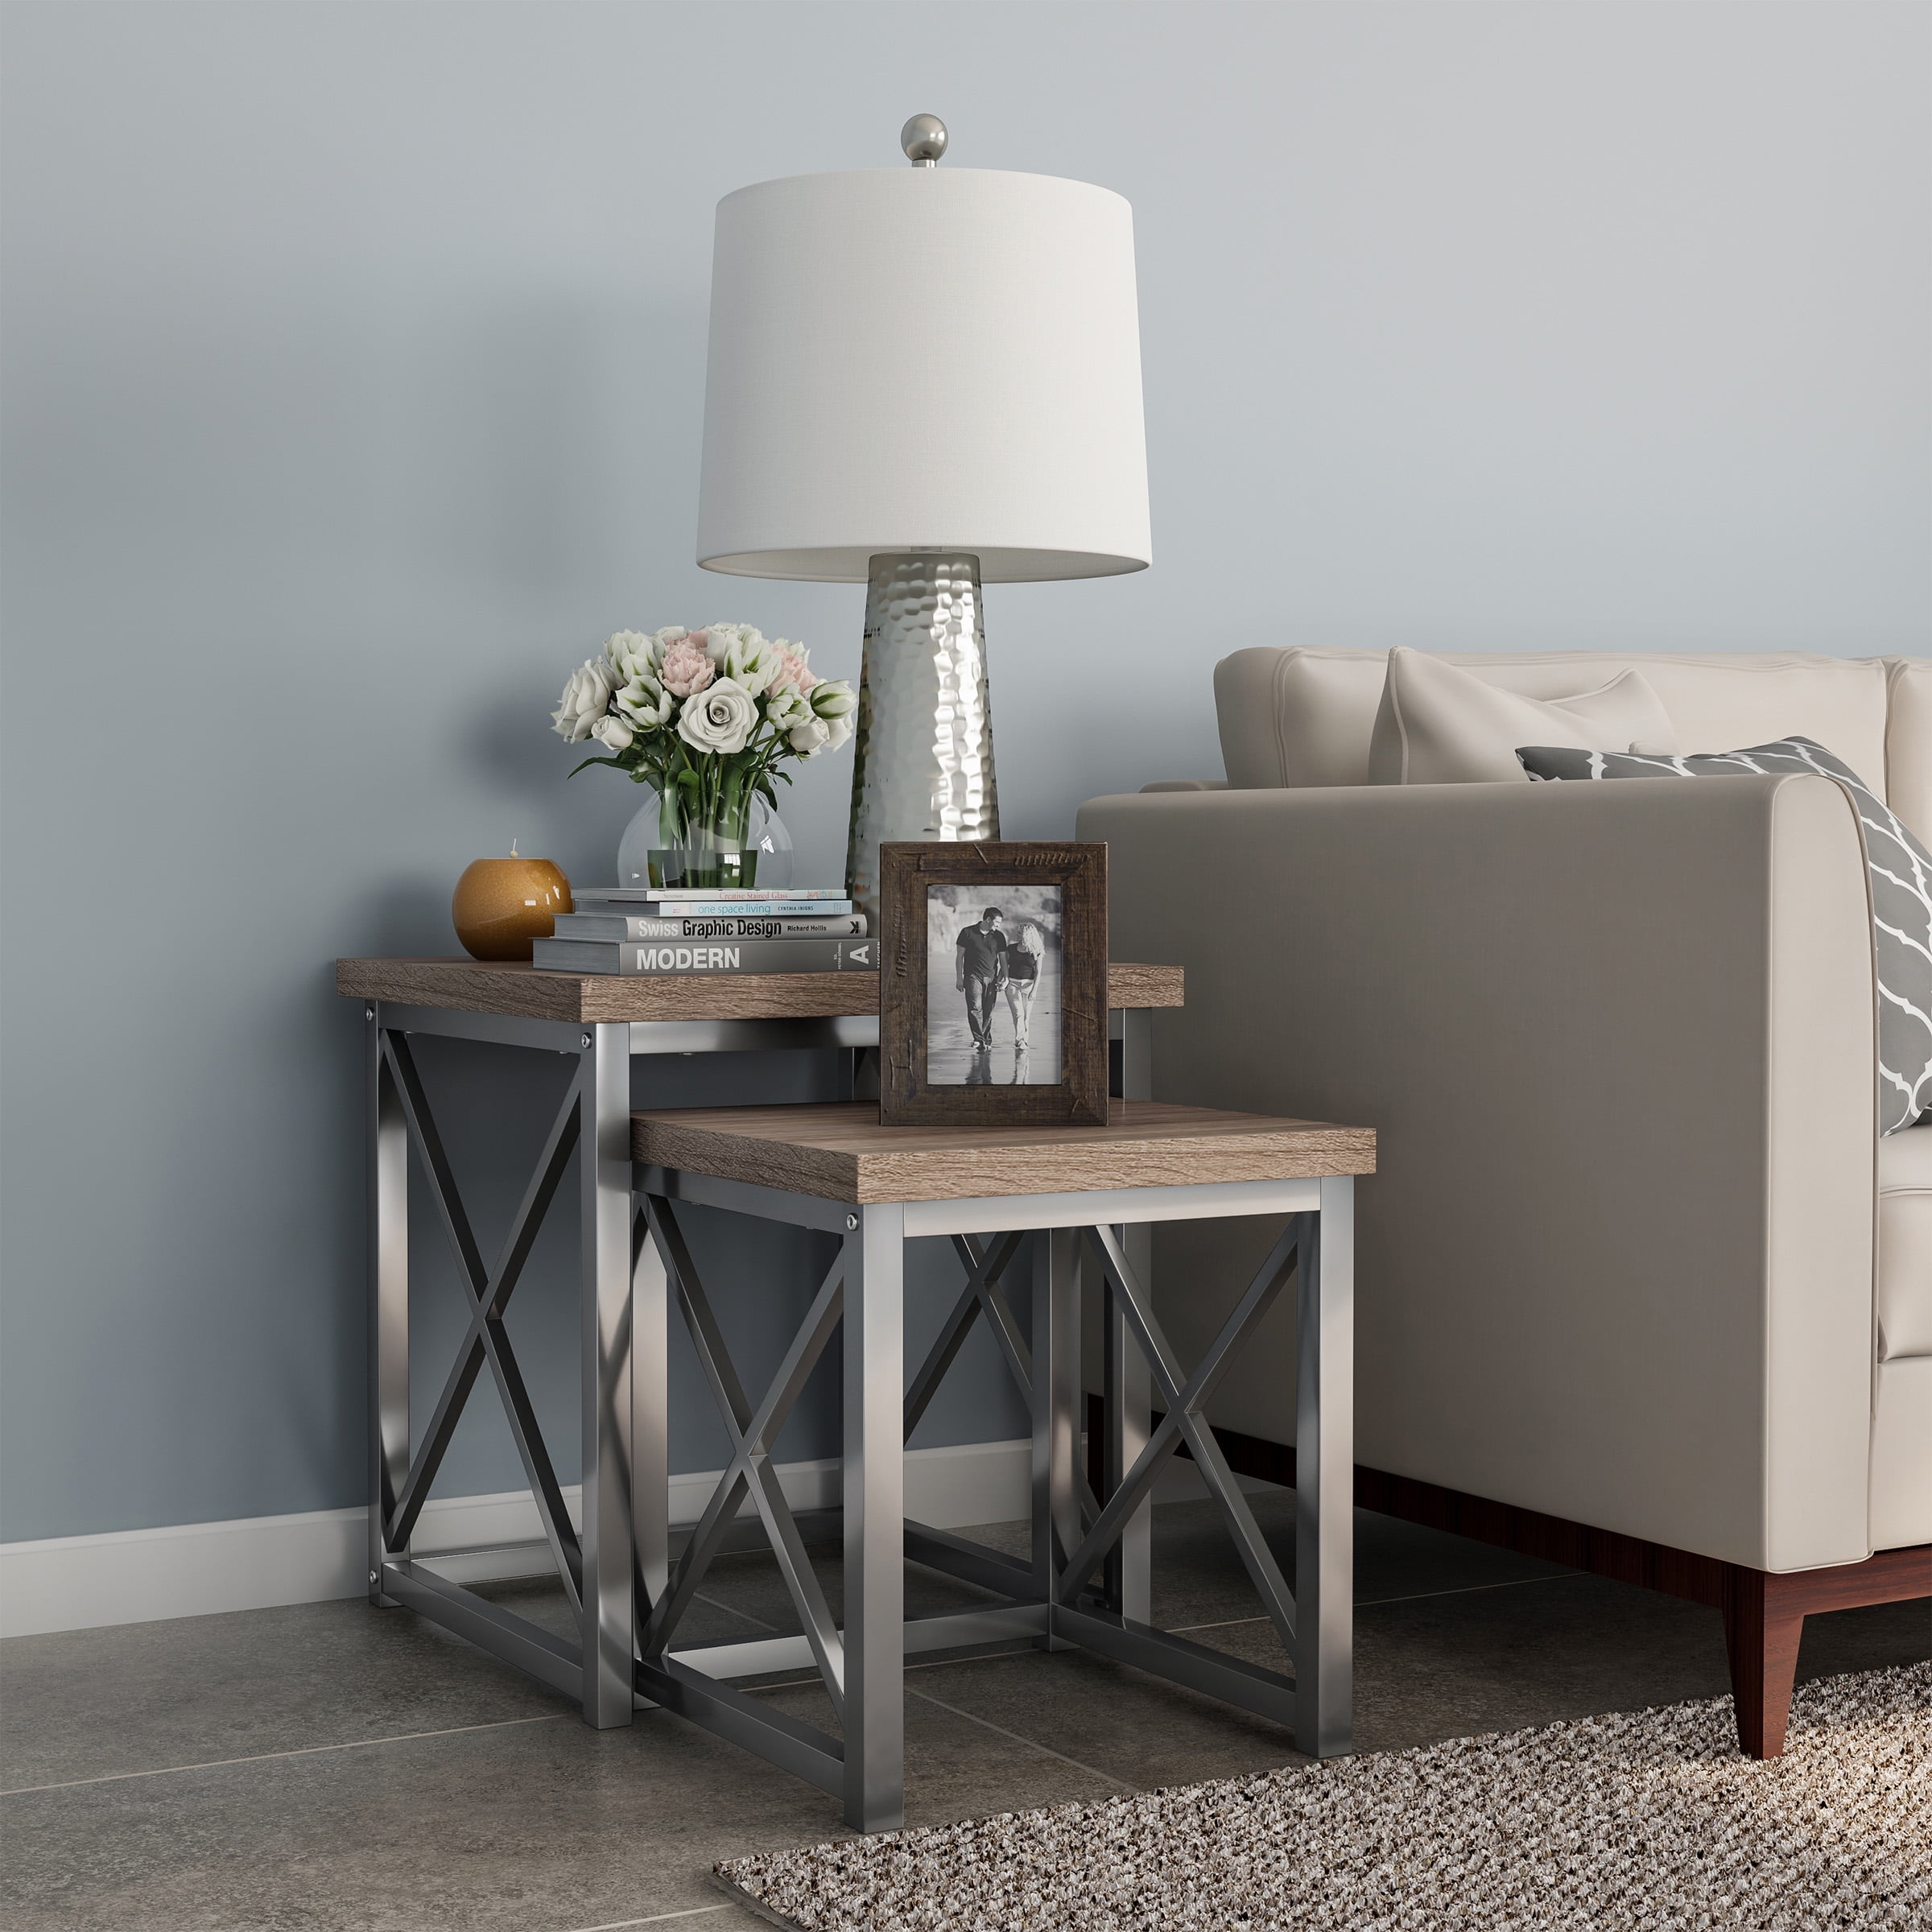 Nesting Tables-Set of 2, Modern Woodgrain Look for Living Room Coffee